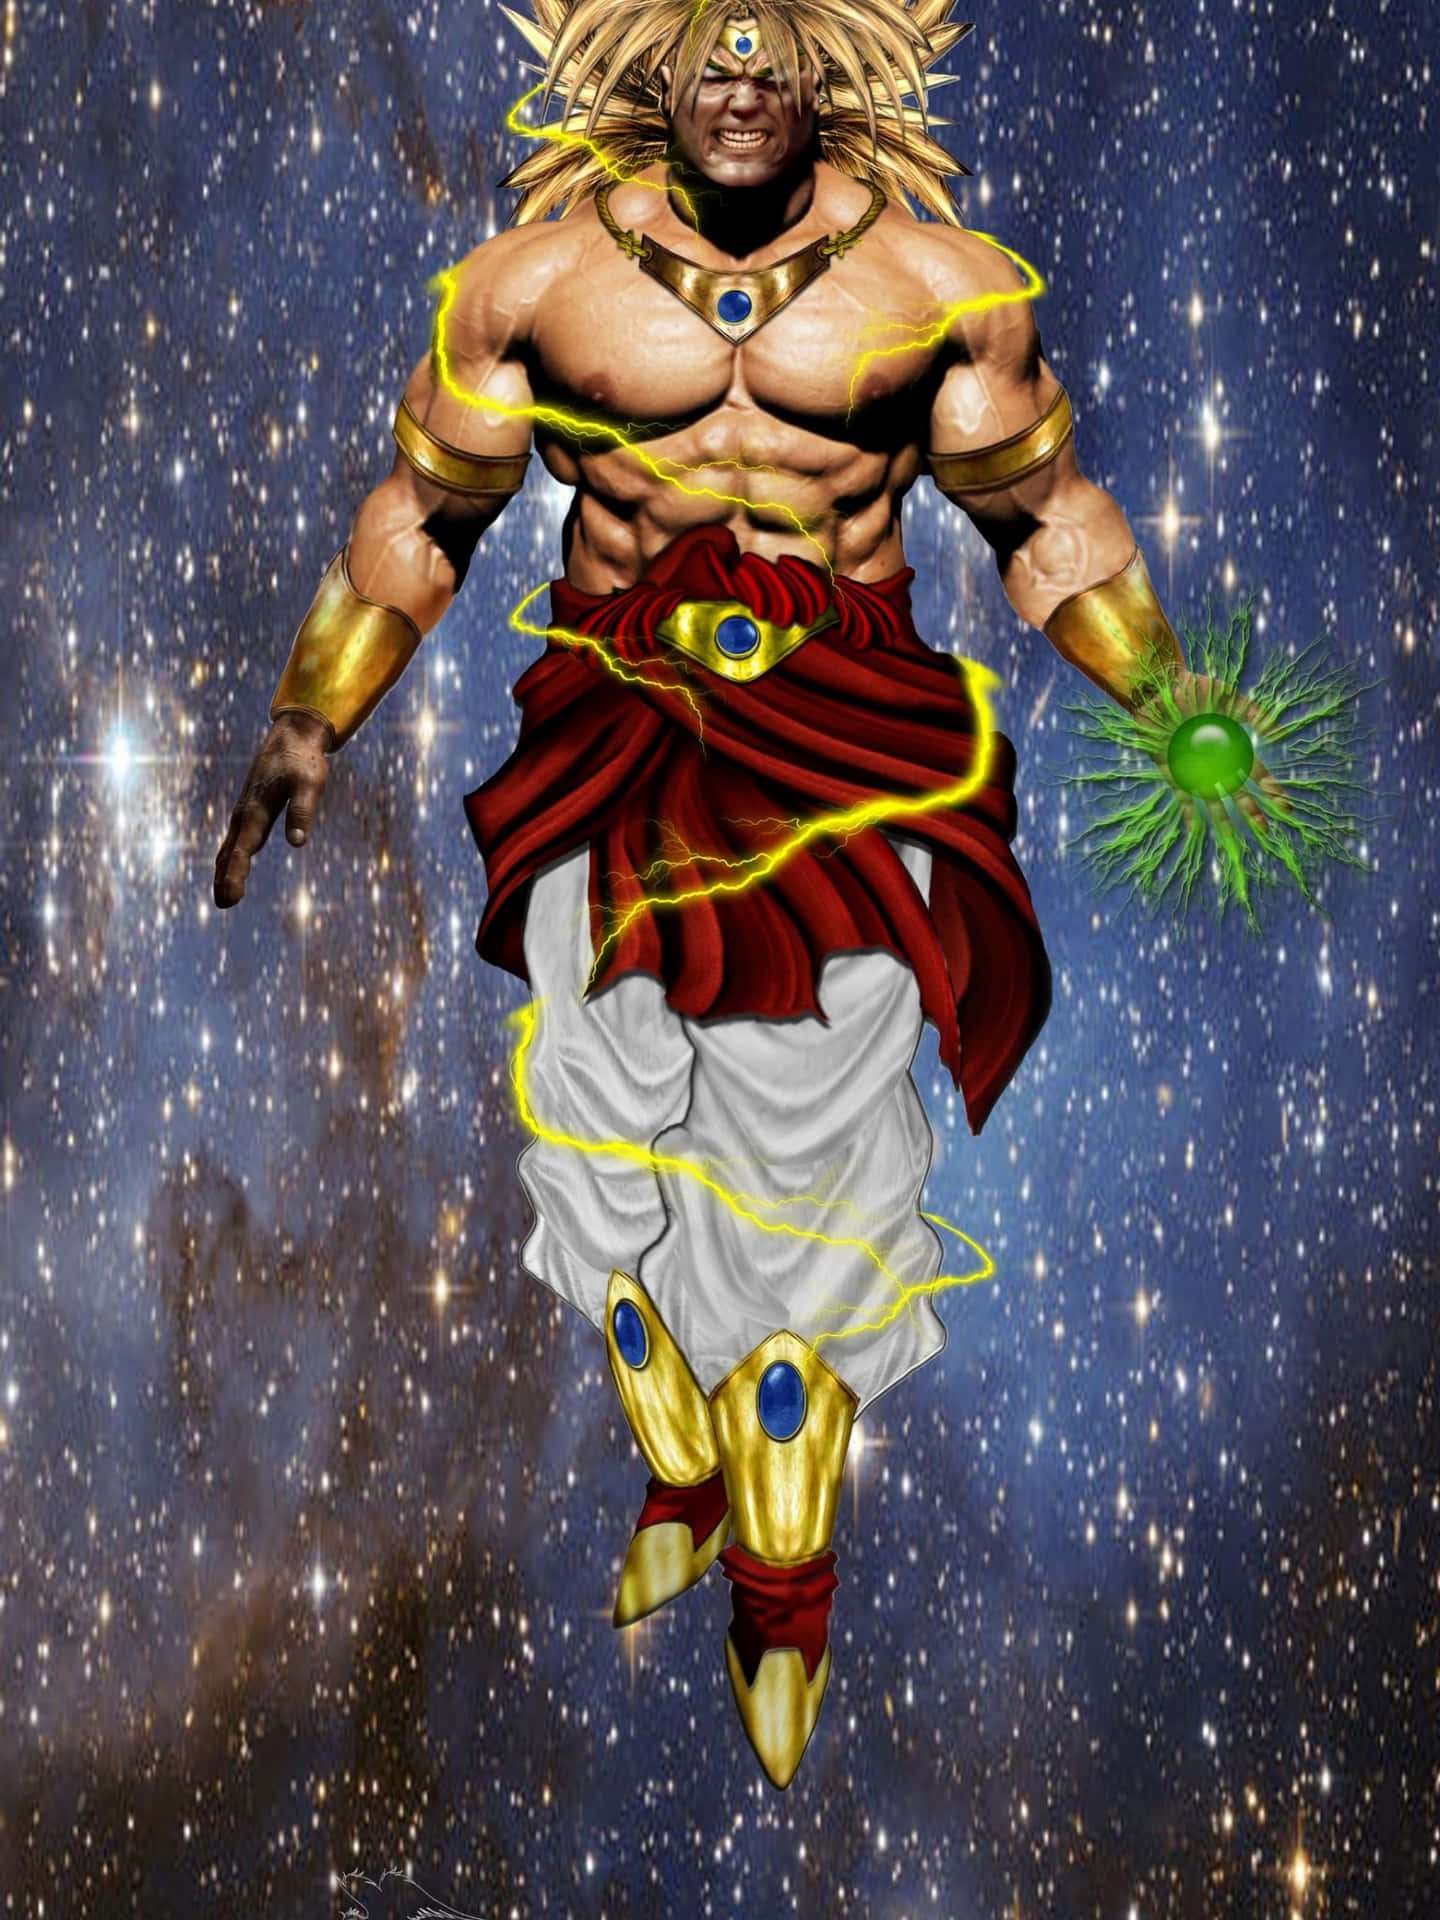 "The Legendary Super Saiyan - Broly" Wallpaper